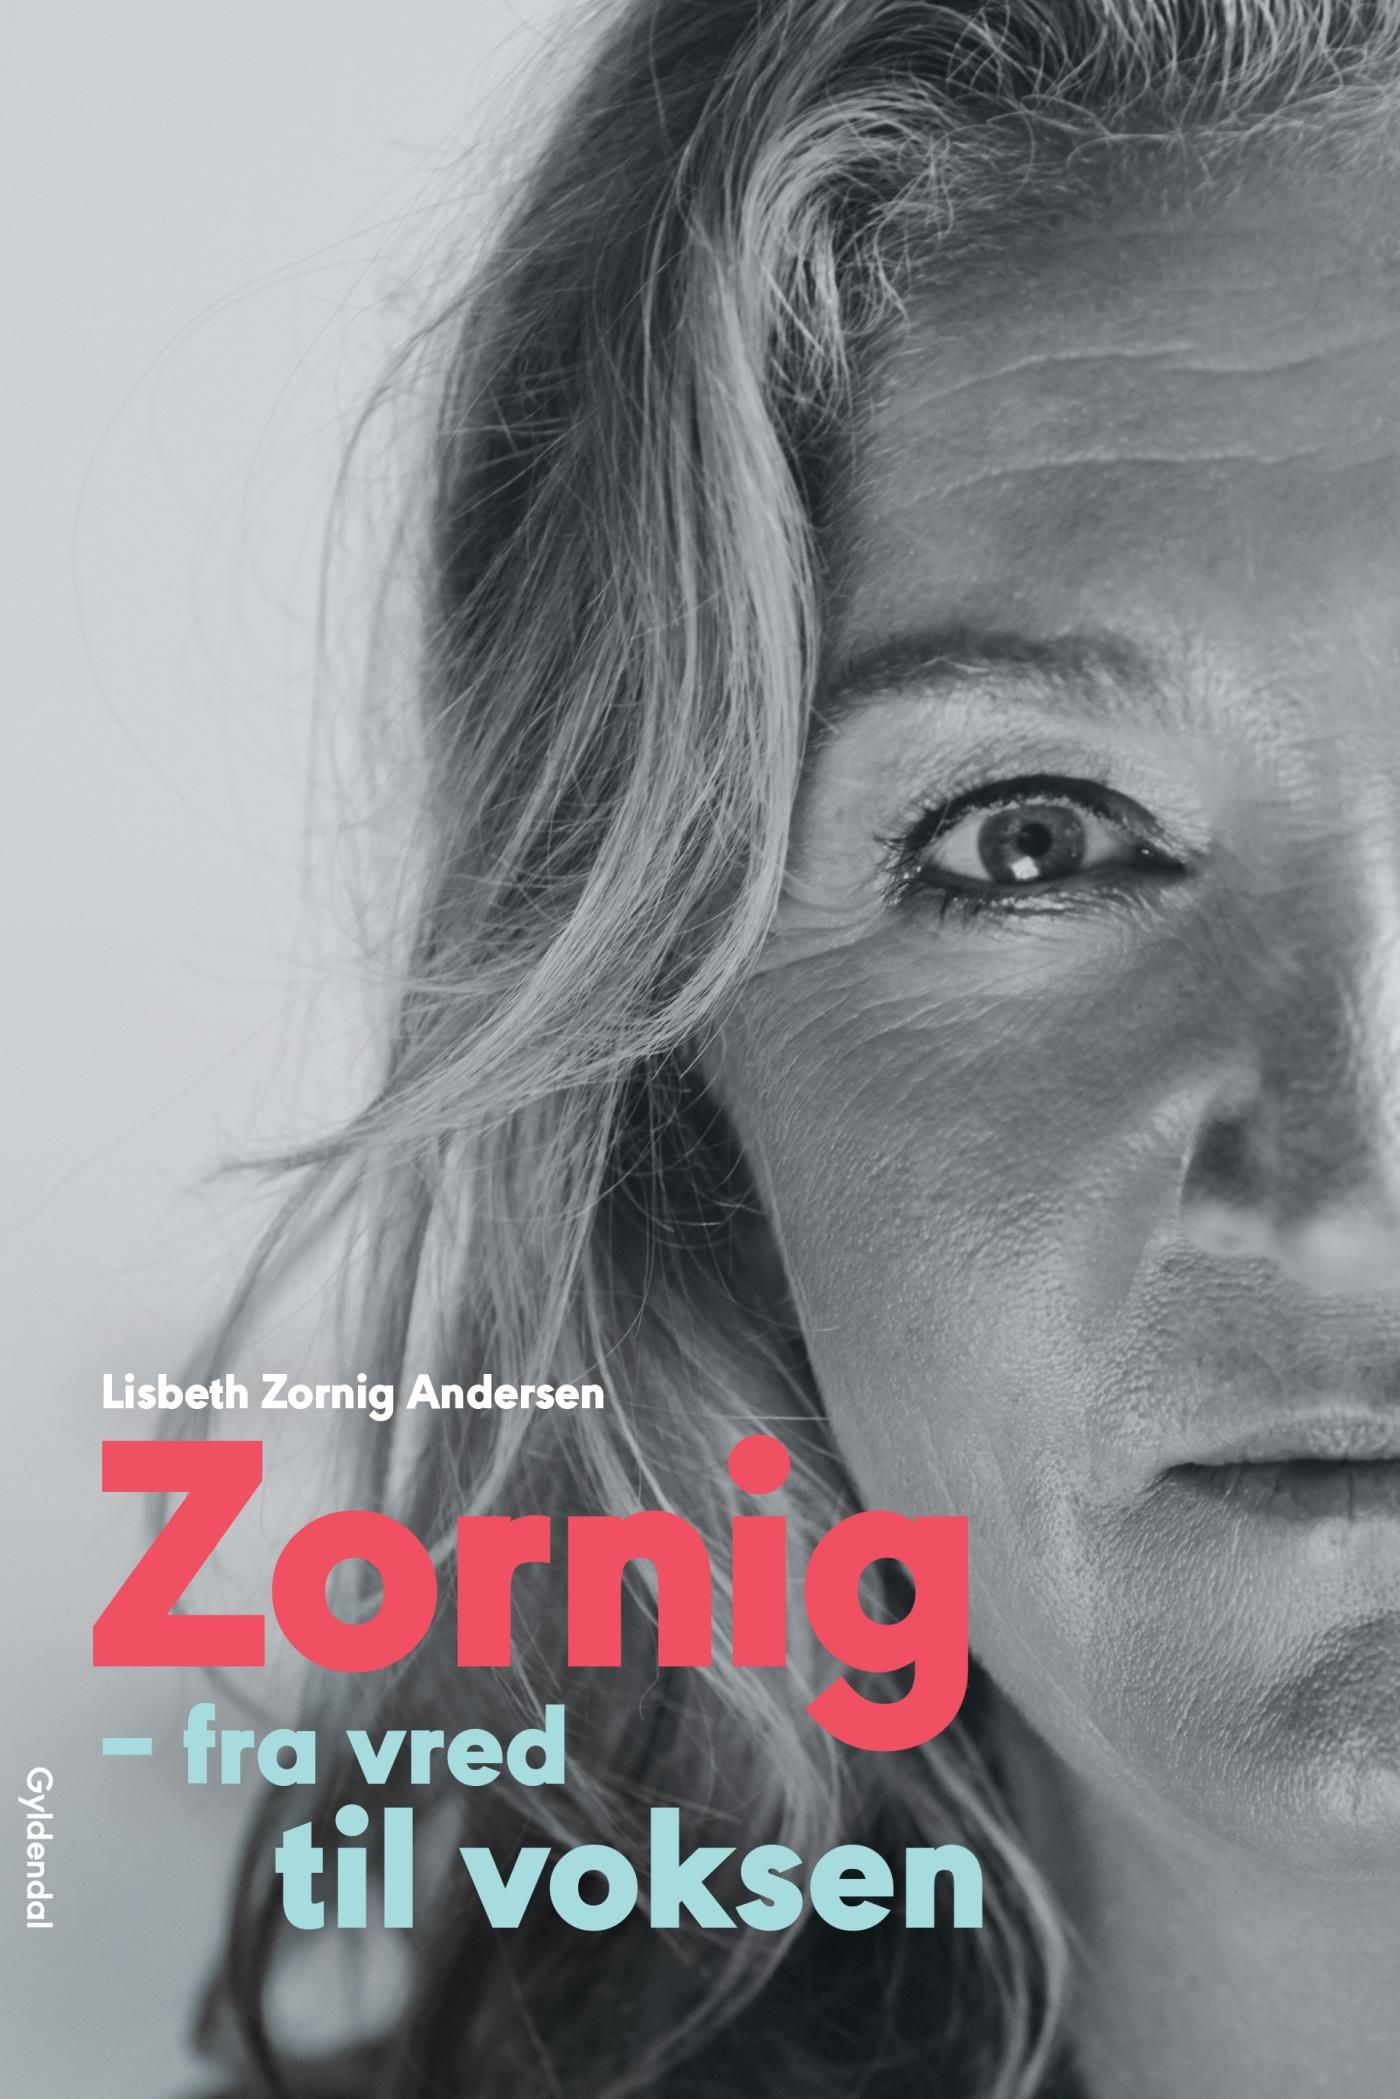 Zornig, e-bok av Lisbeth Zornig Andersen